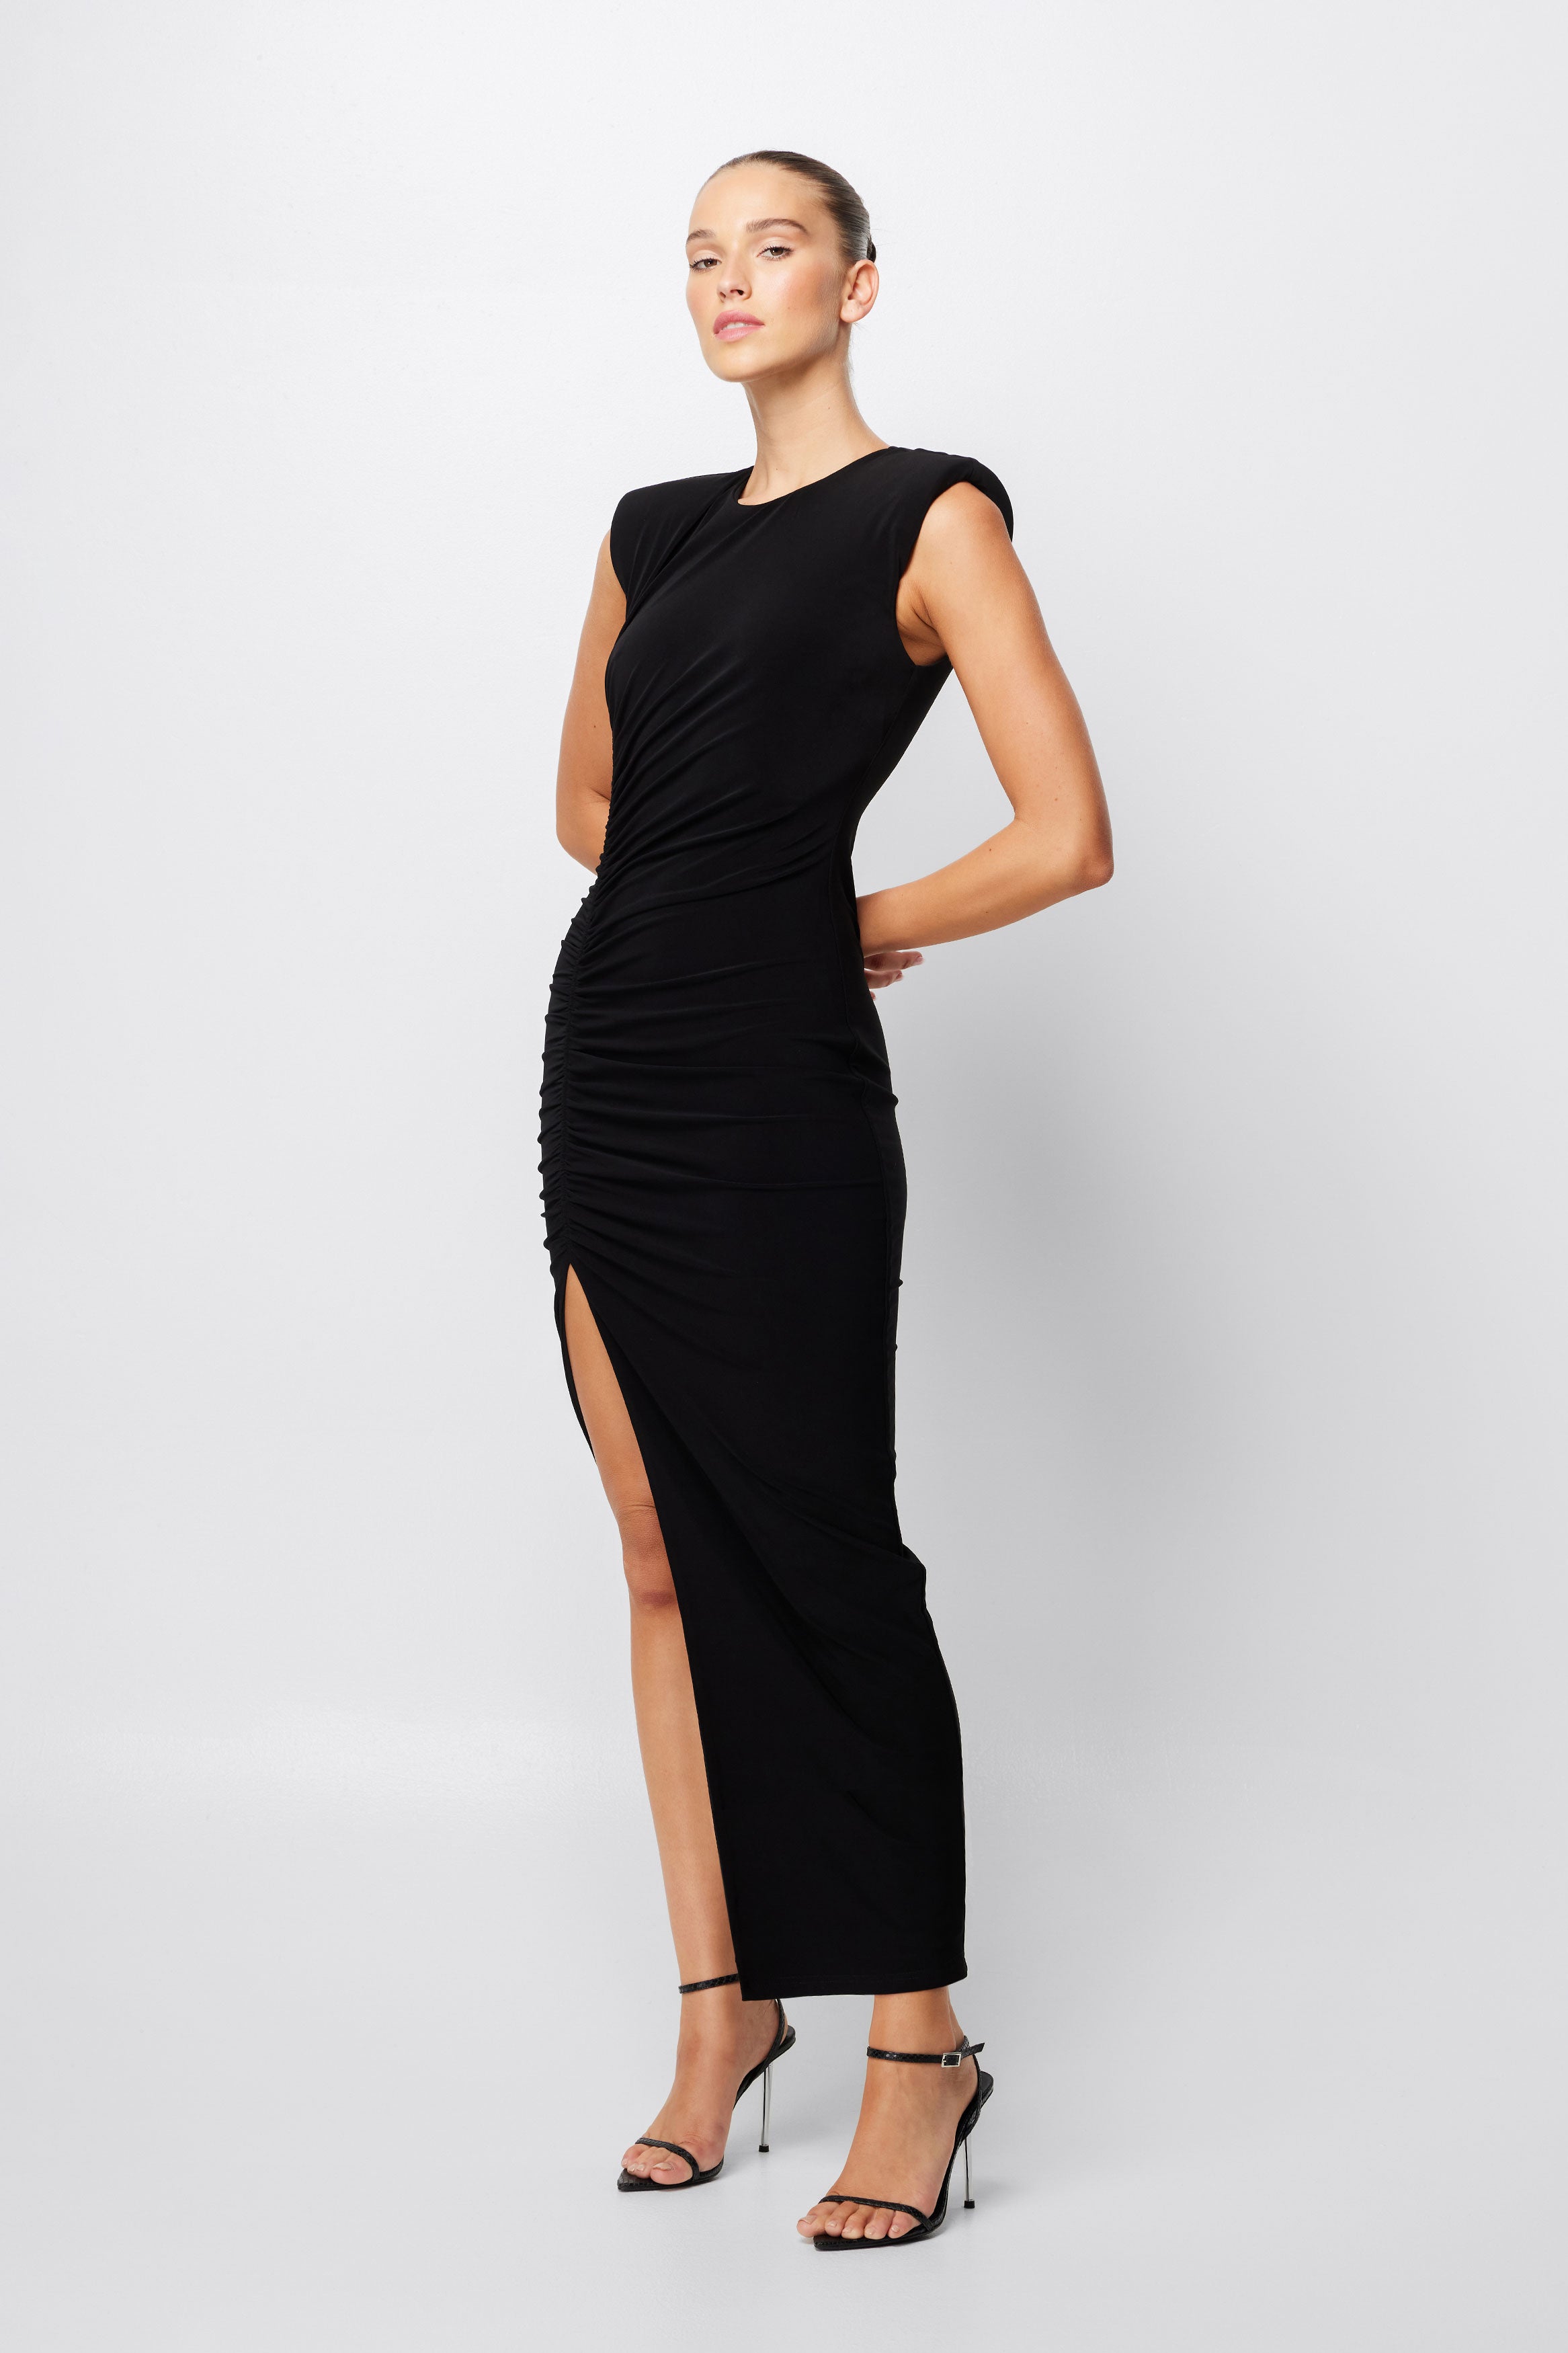 The Ulterior Motive Midi Dress - Black